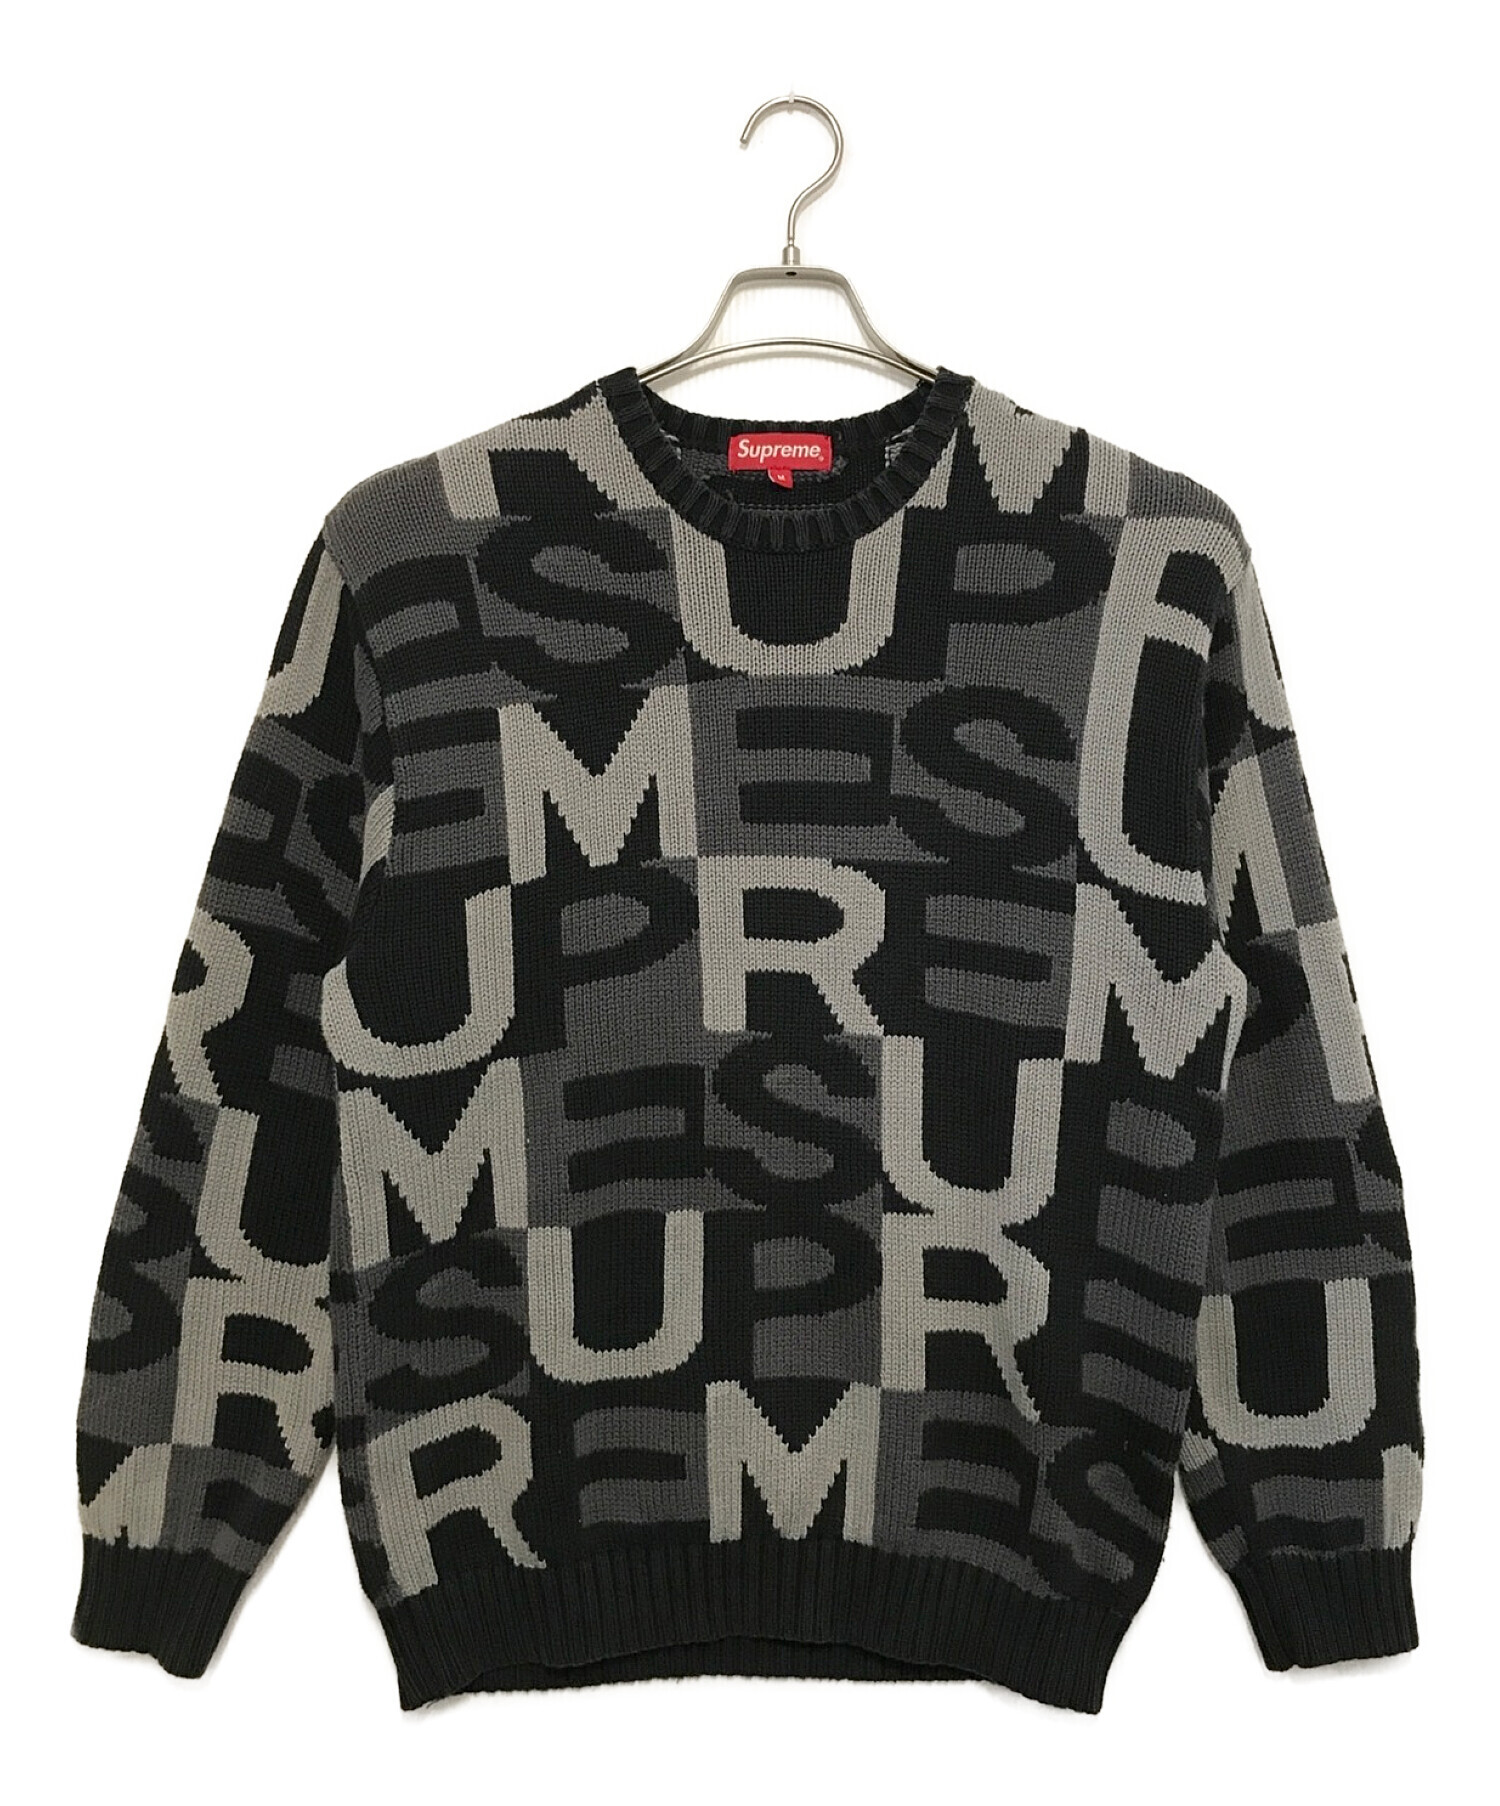 supremeSupreme Big Letters Sweater シュプリーム セーター - ニット ...